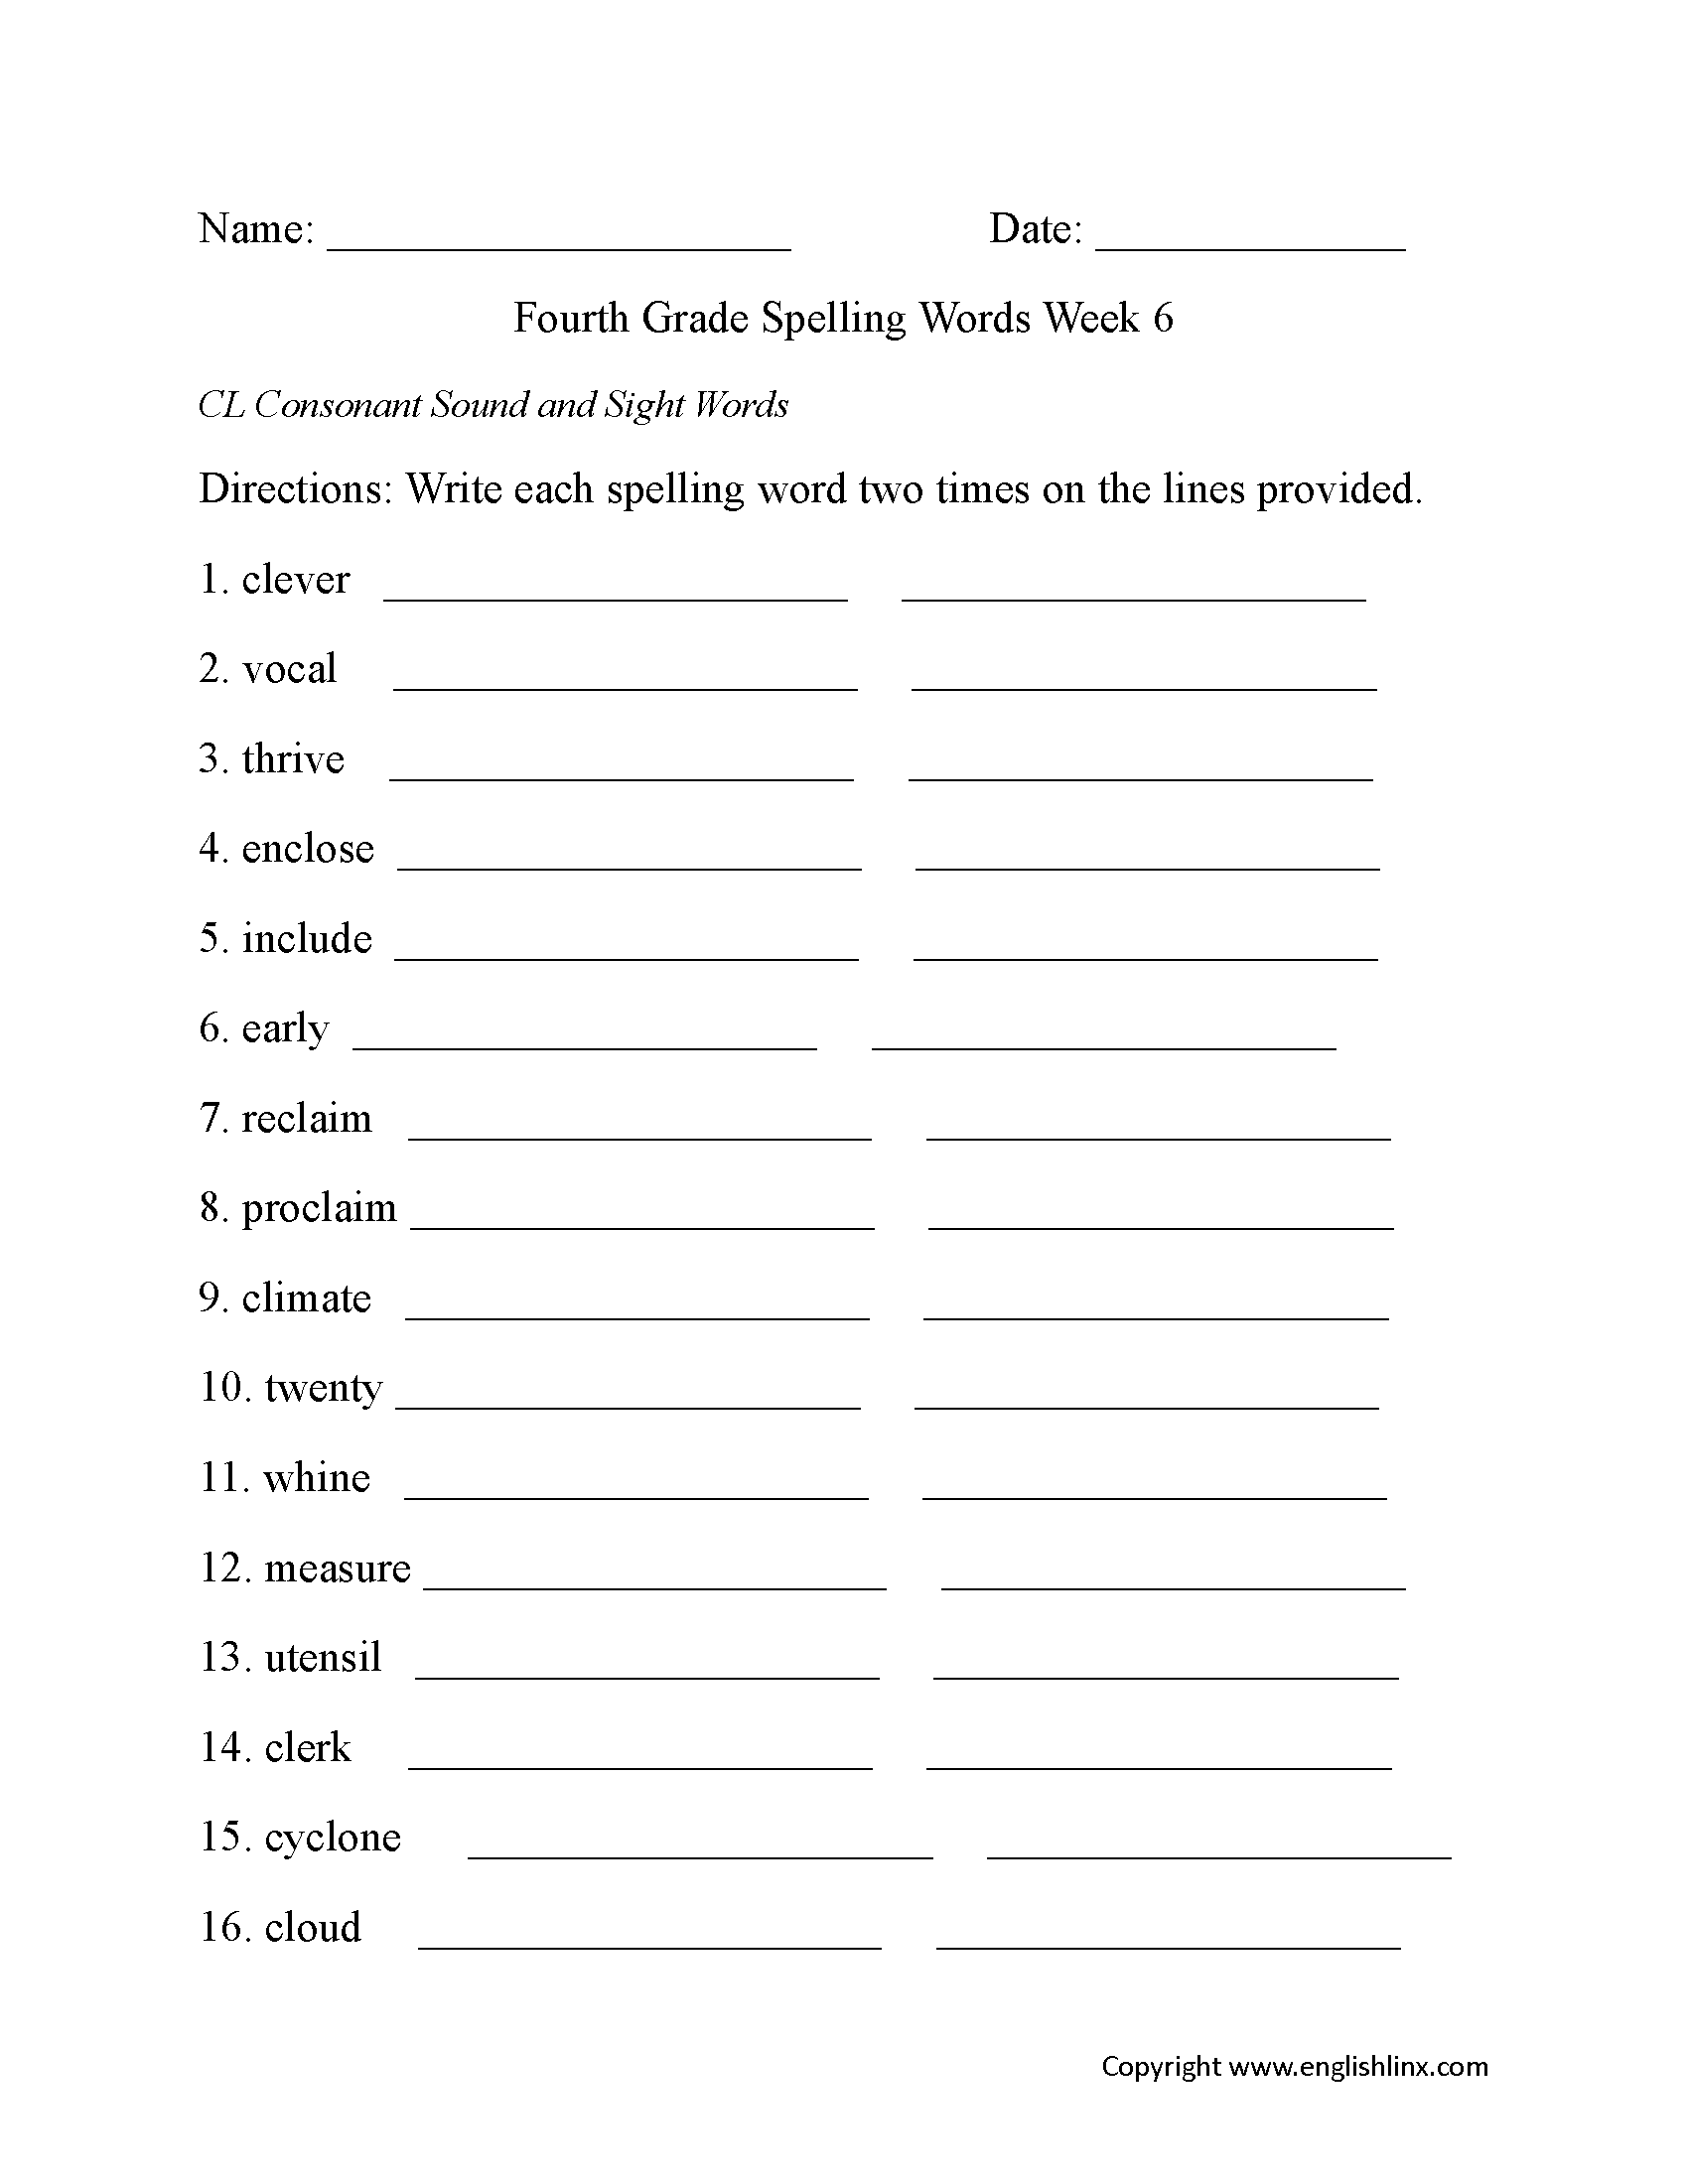 Spelling Words Worksheets For 4th Grade